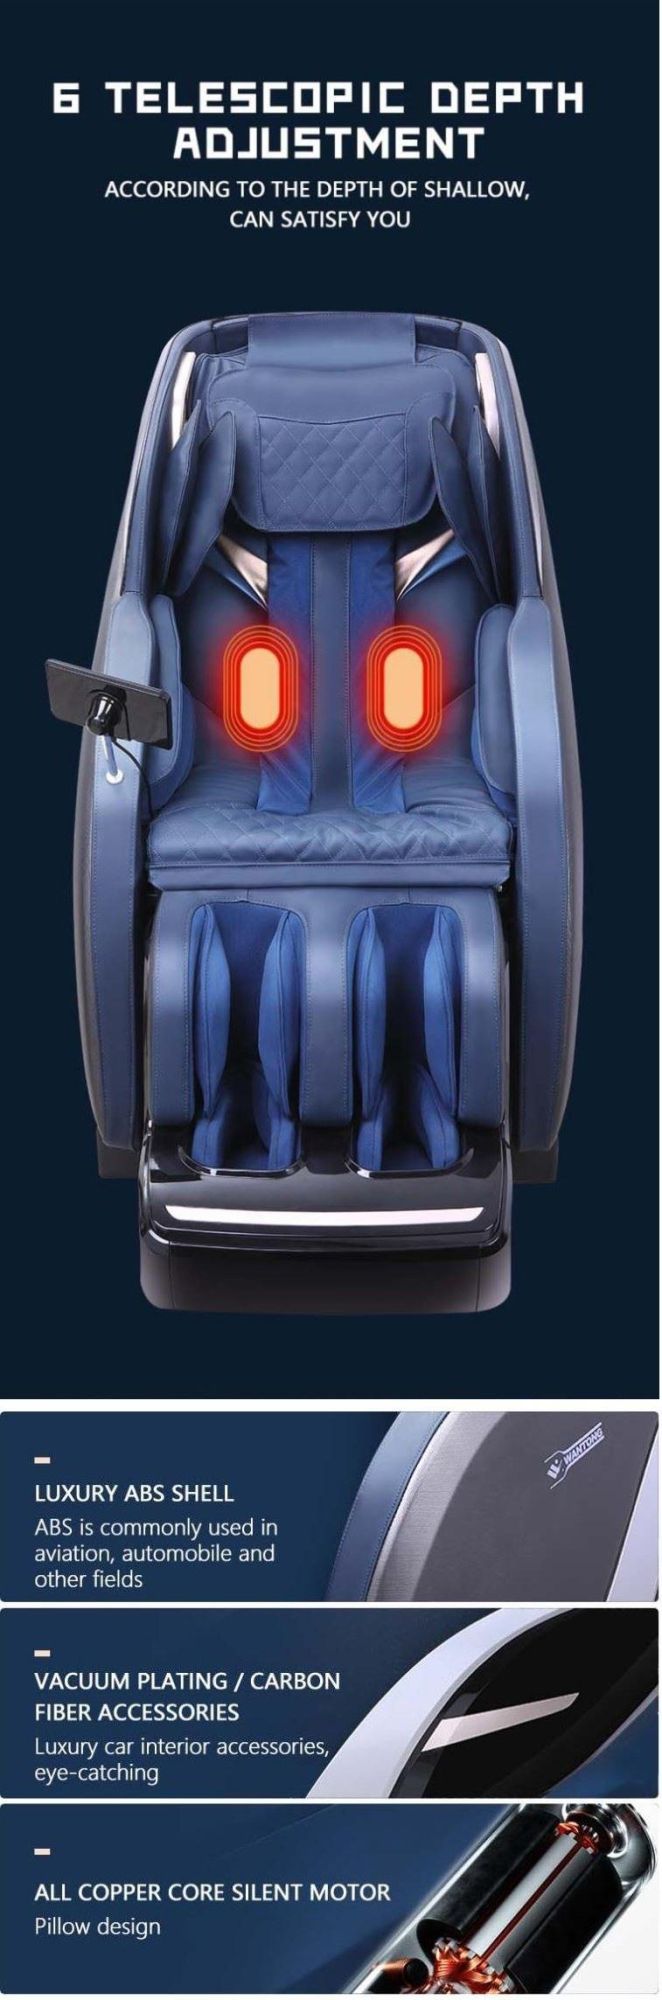 Luxury SL Guide Track Shiatsu Full Body 4D Massage Chair